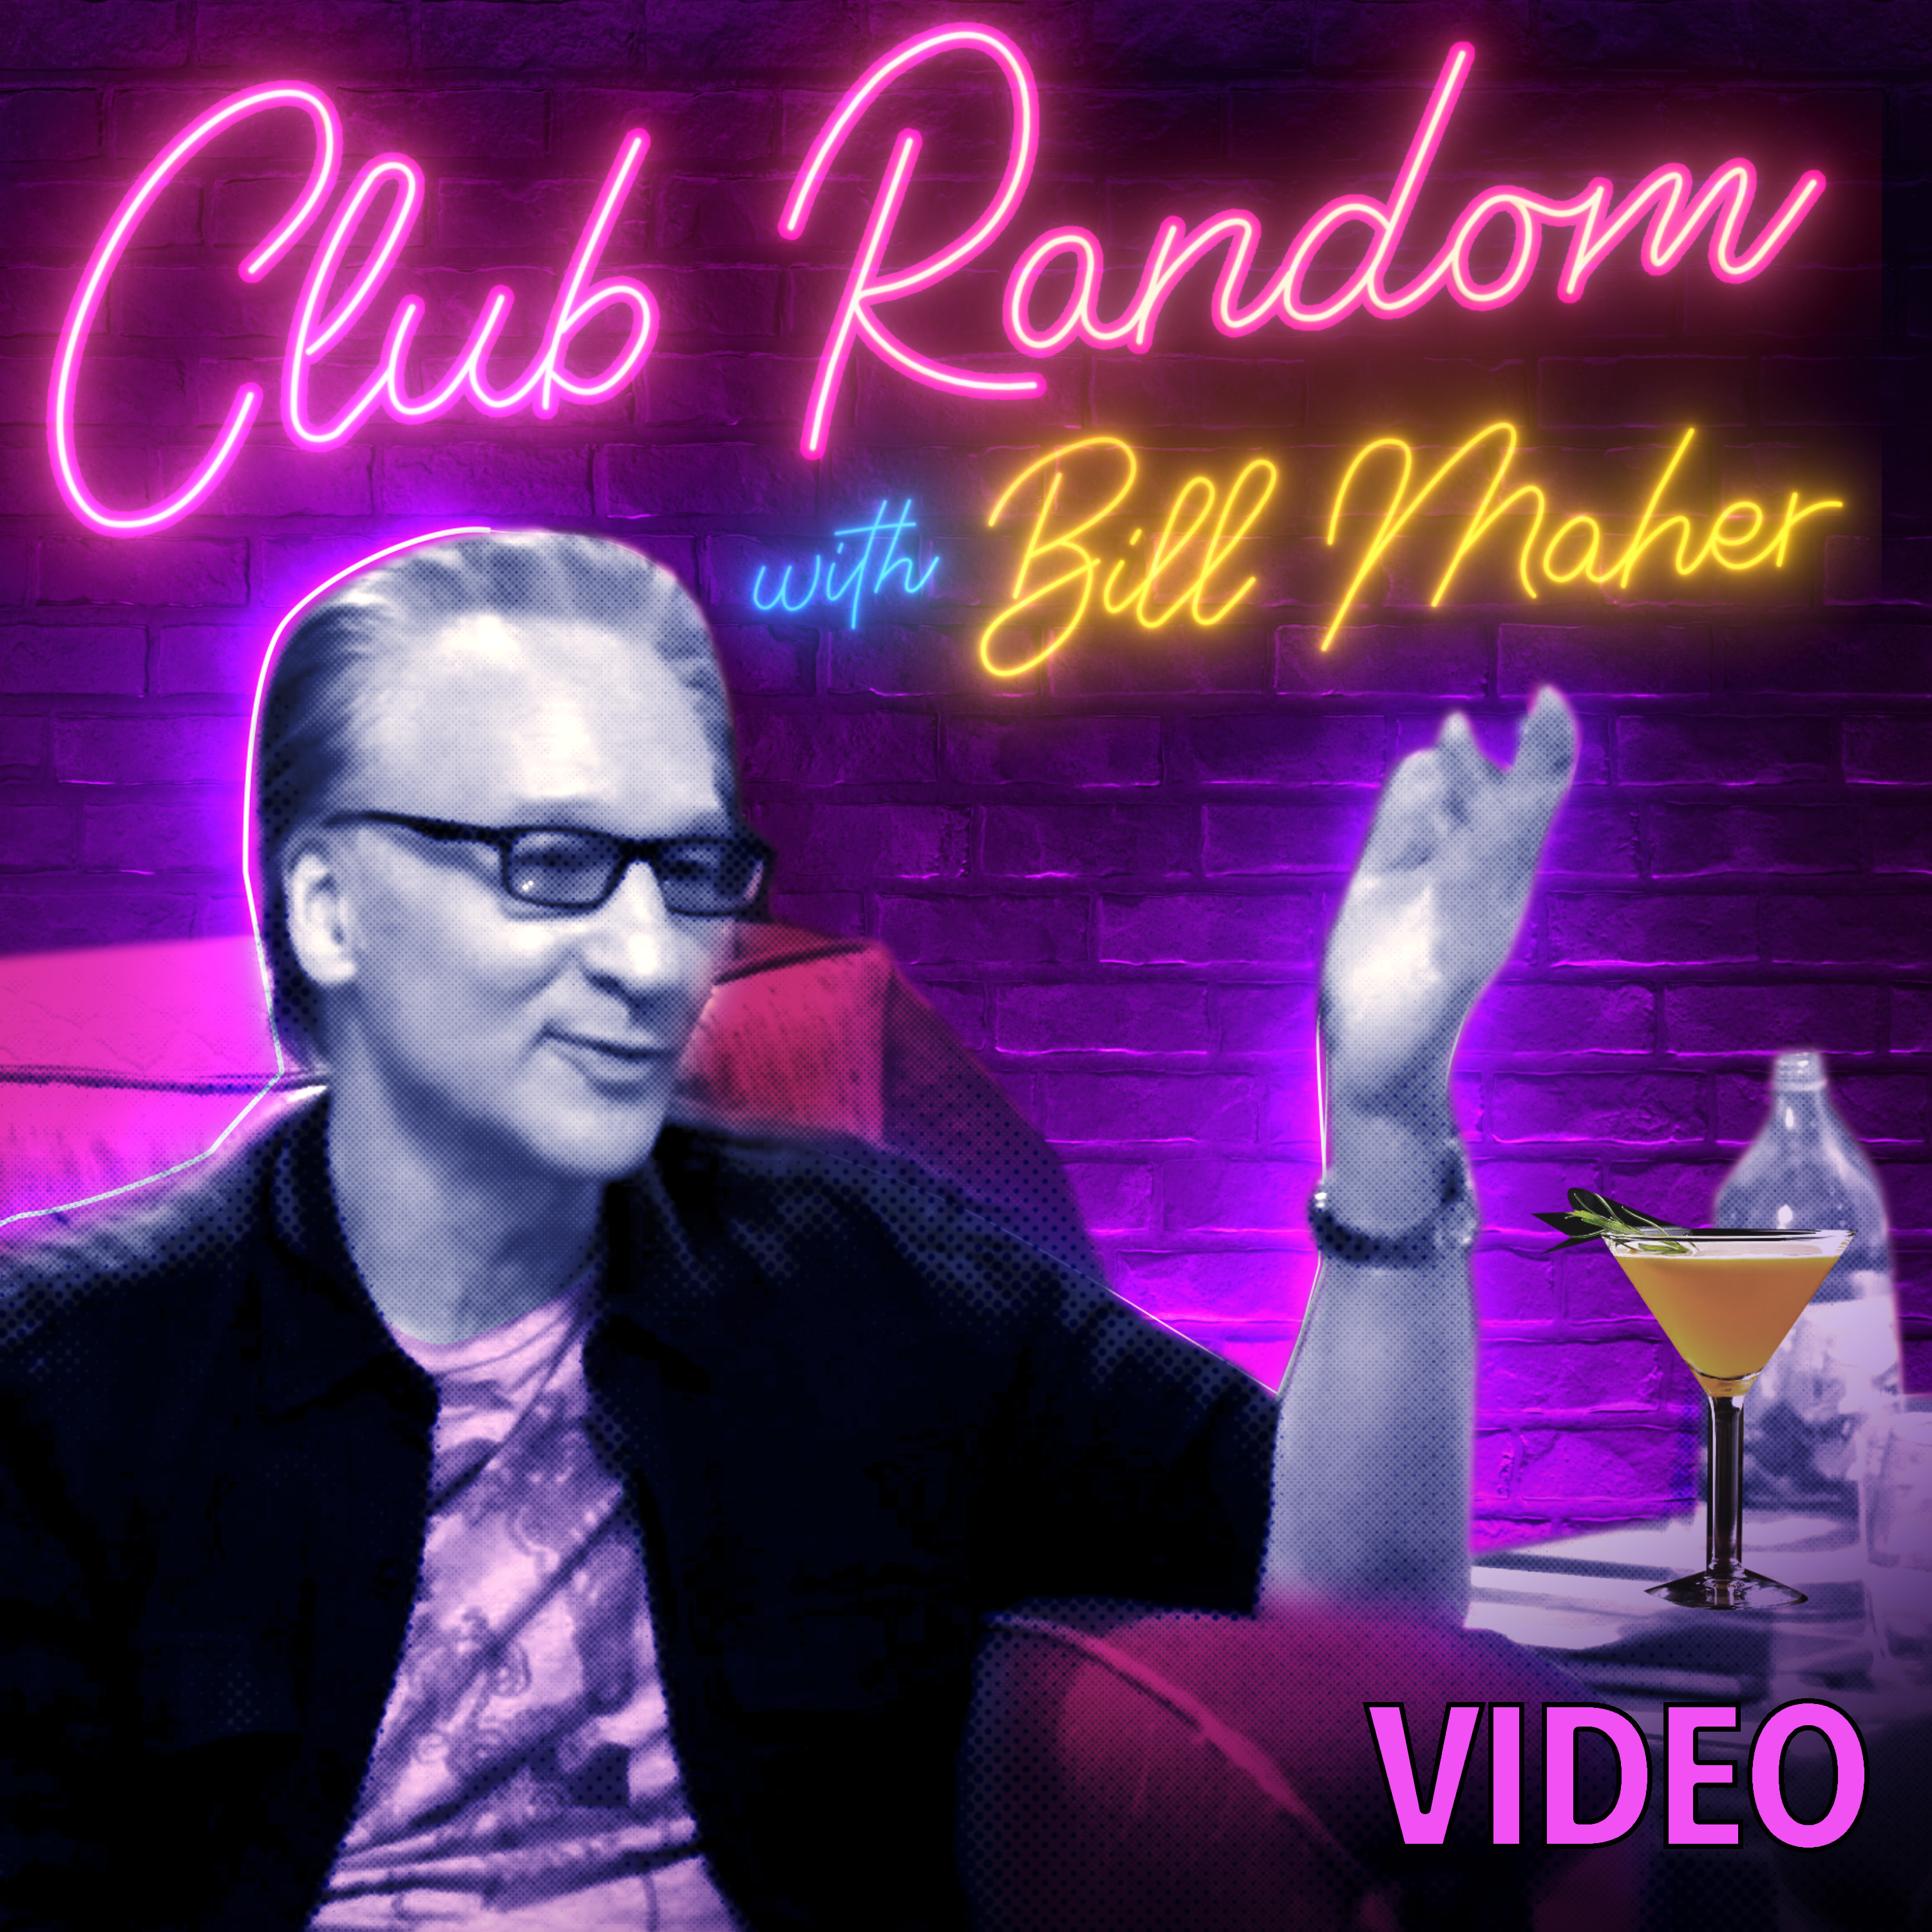 Video: Sharon Osbourne | Club Random with Bill Maher